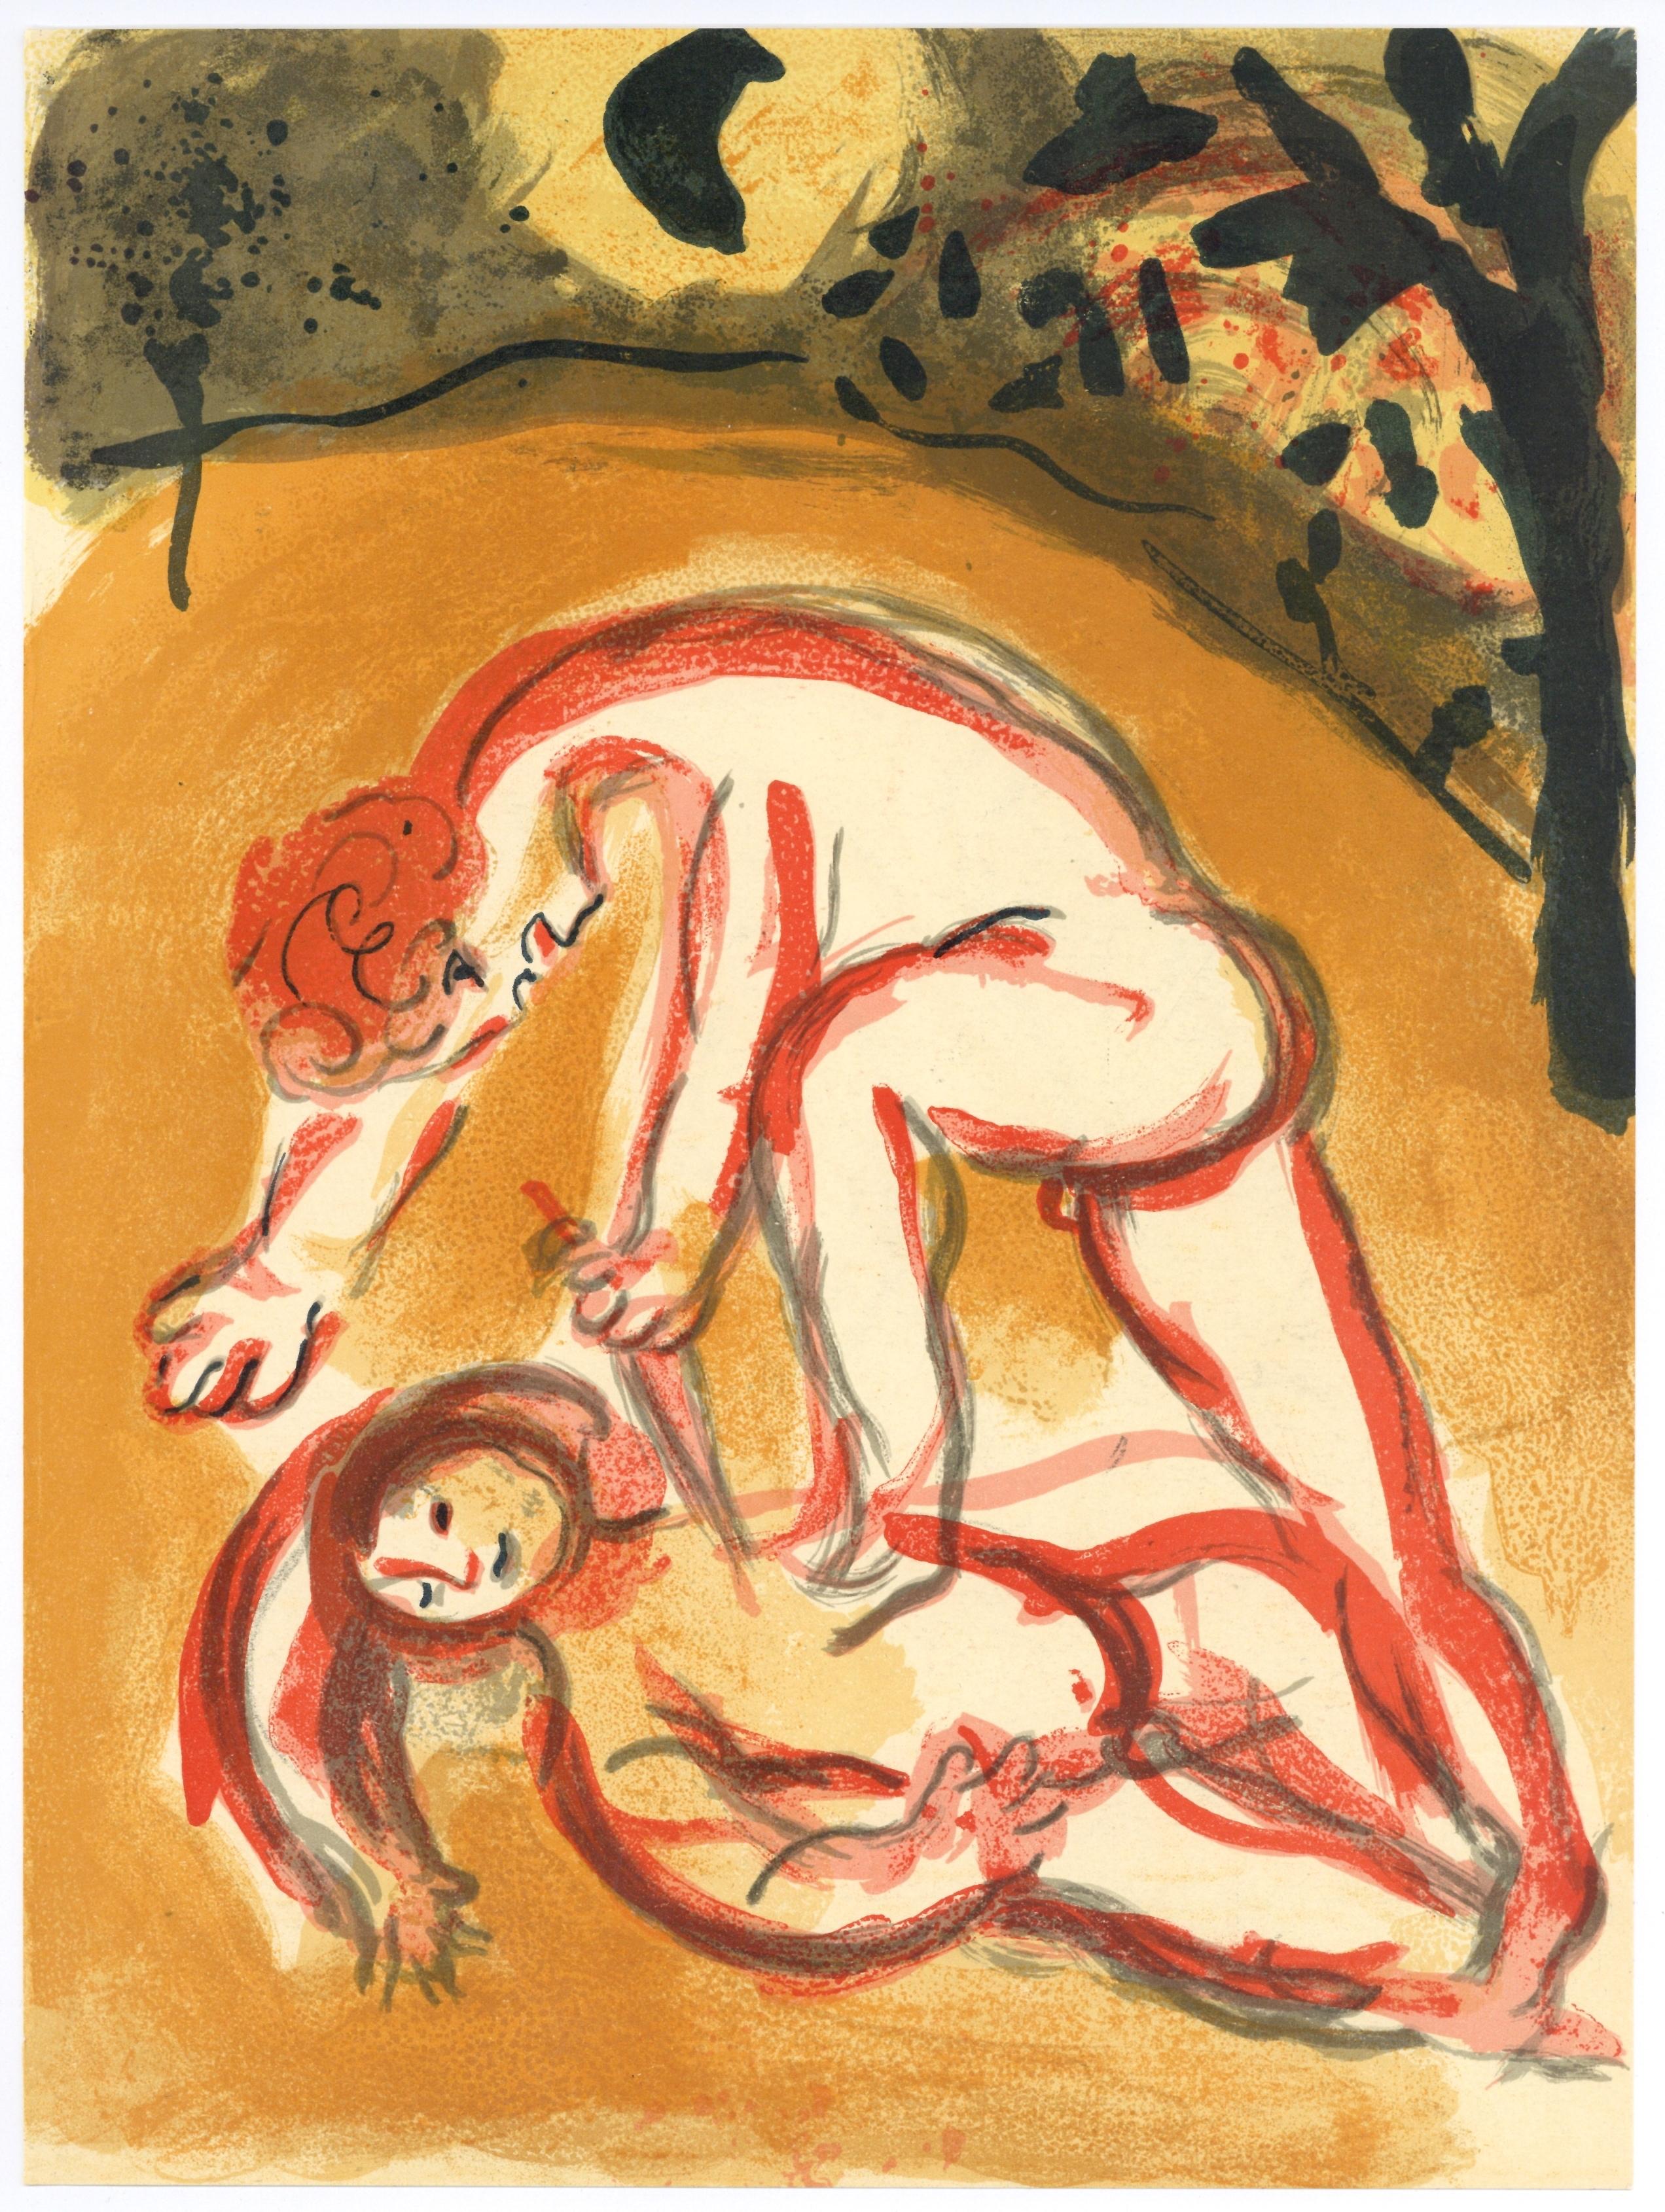 Marc Chagall Portrait Print - "Cain and Abel" original lithograph